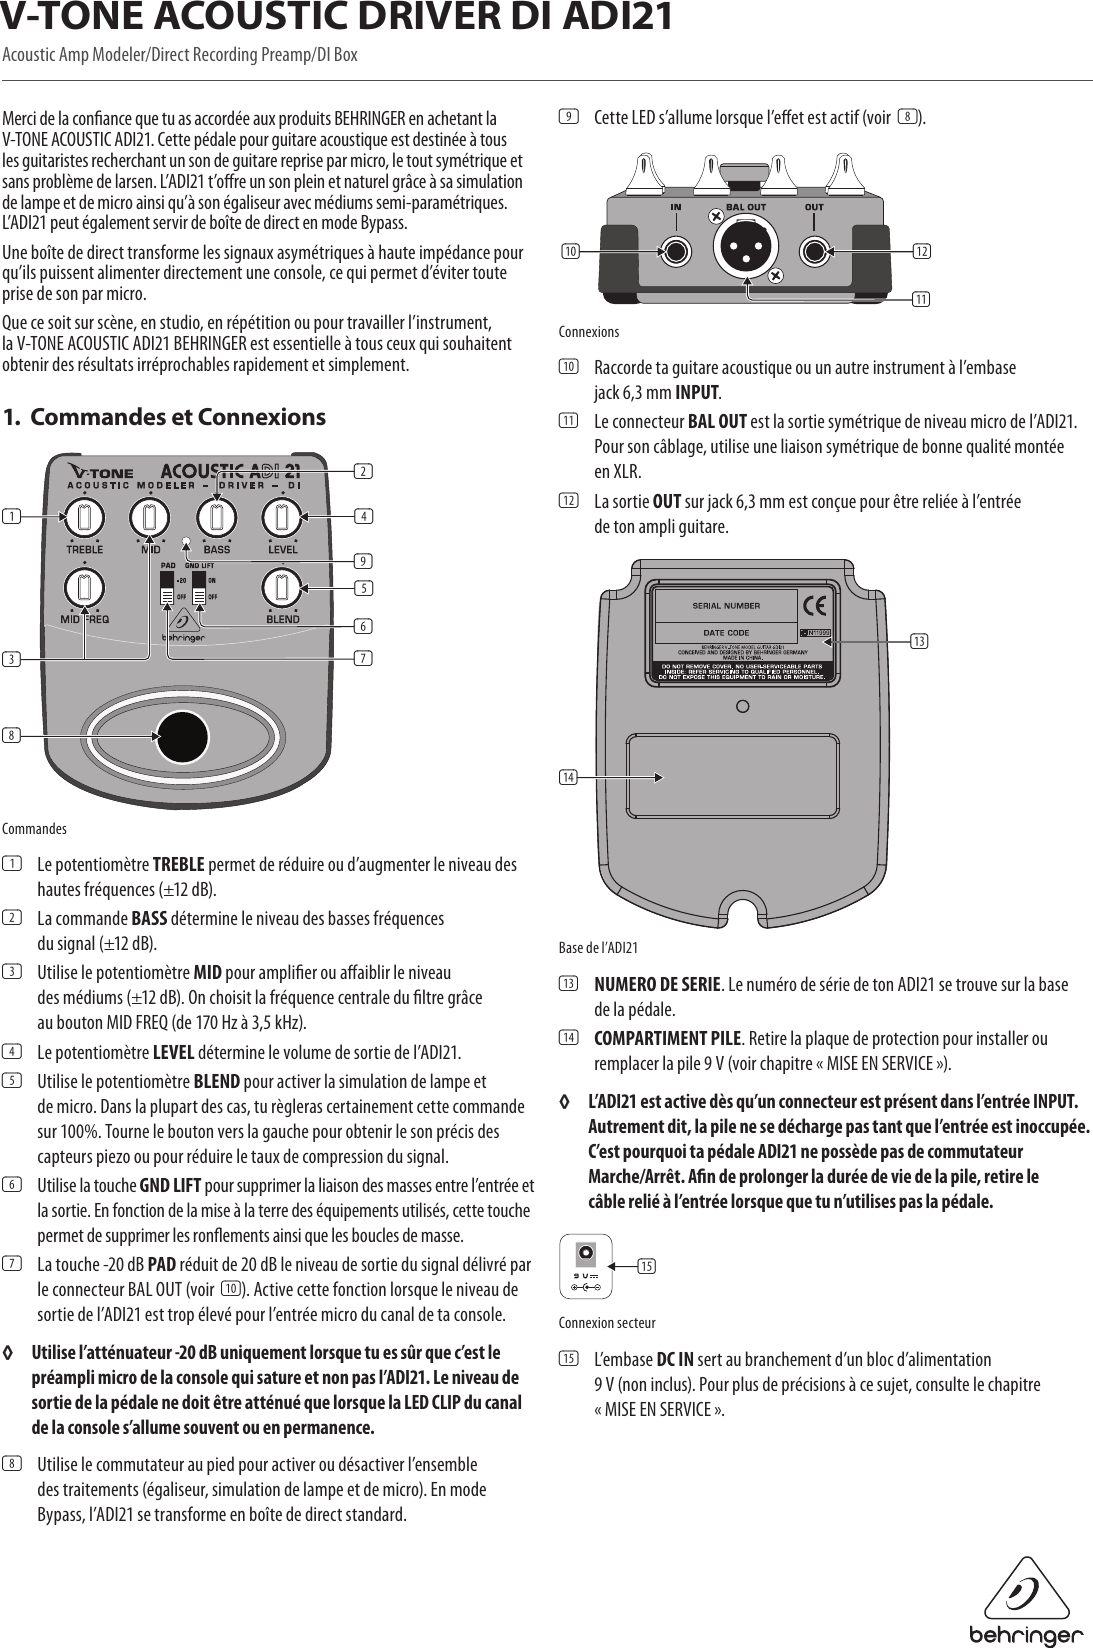 Page 1 of 2 - P0293 (ADI21) Behringer ADI21 User Manual (French) M FR